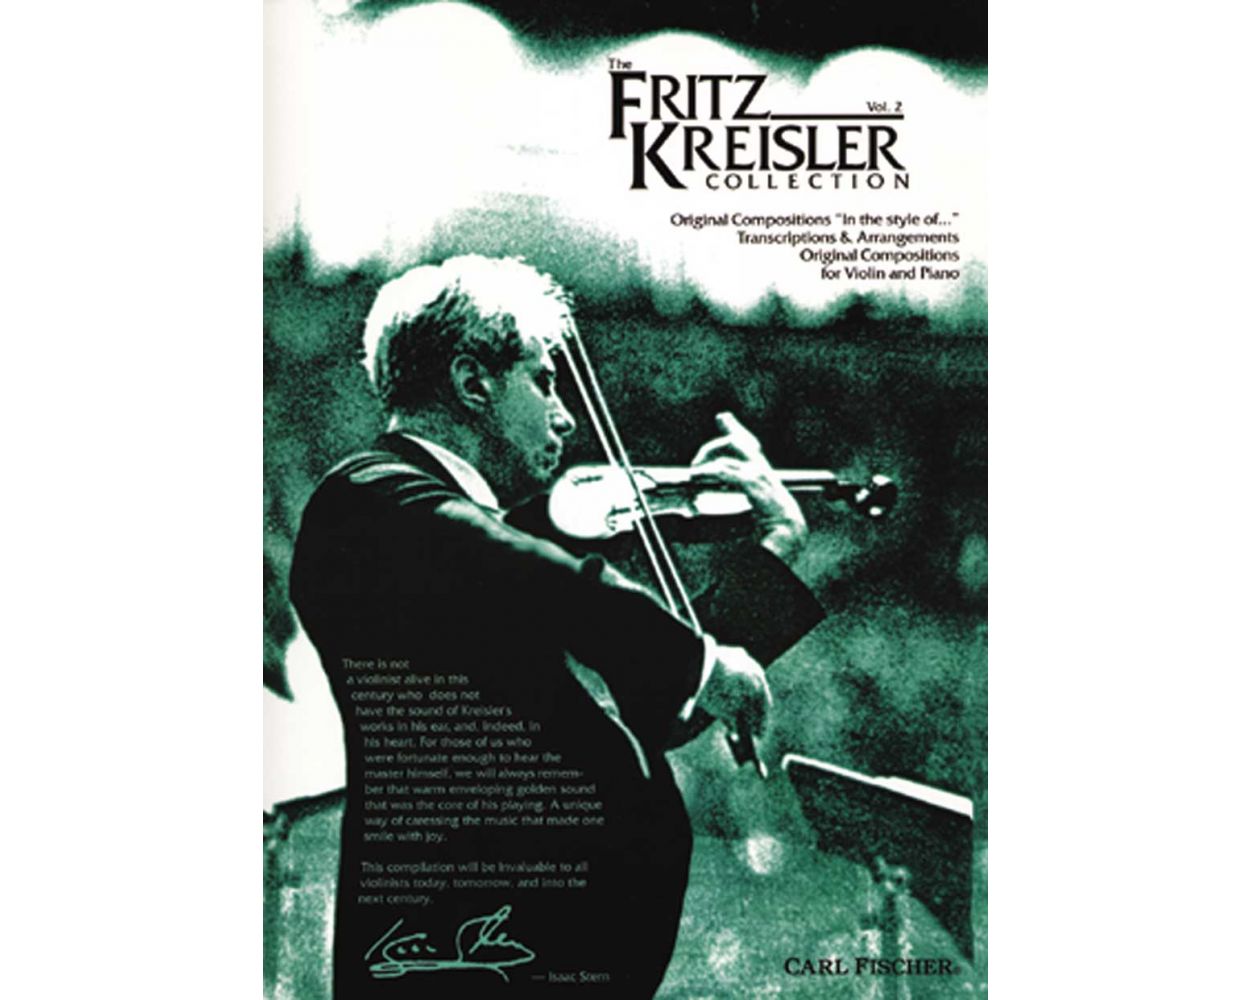 The Fritz Kreisler Collection, Volume 2